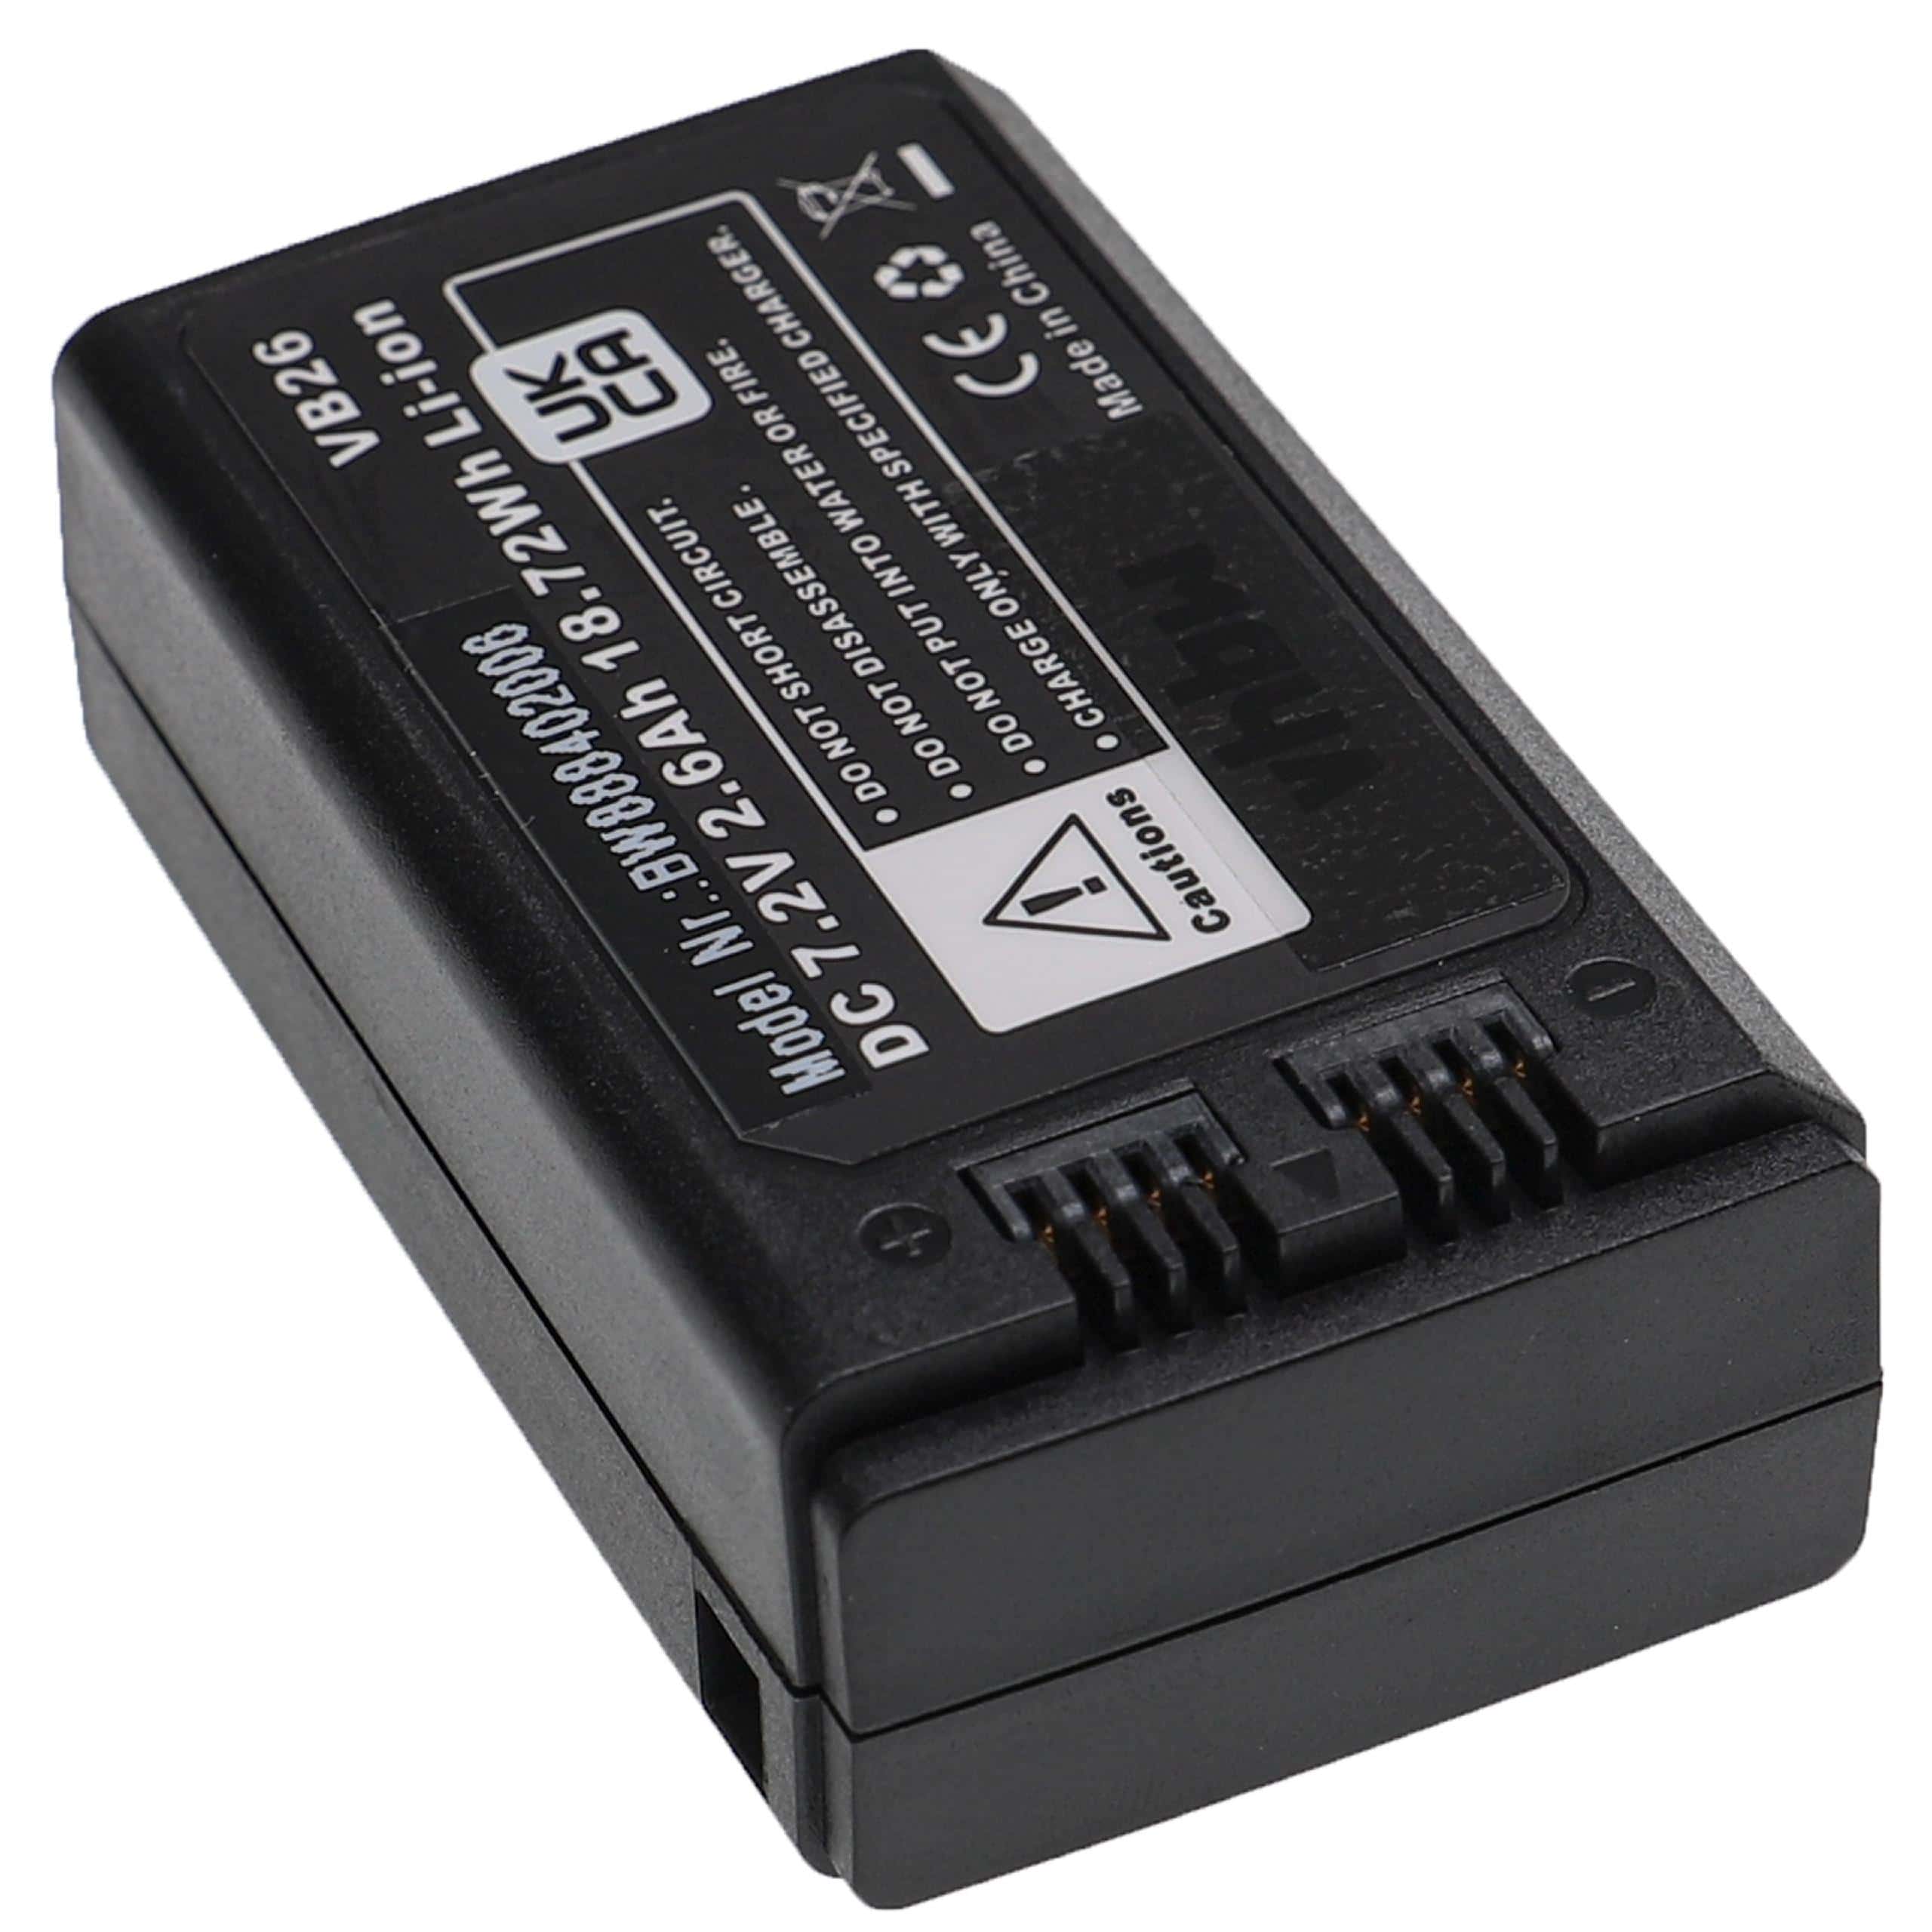 Batterie remplace Godox VB26A, VB26 pour flash photo - 2600mAh 7,2V Li-ion